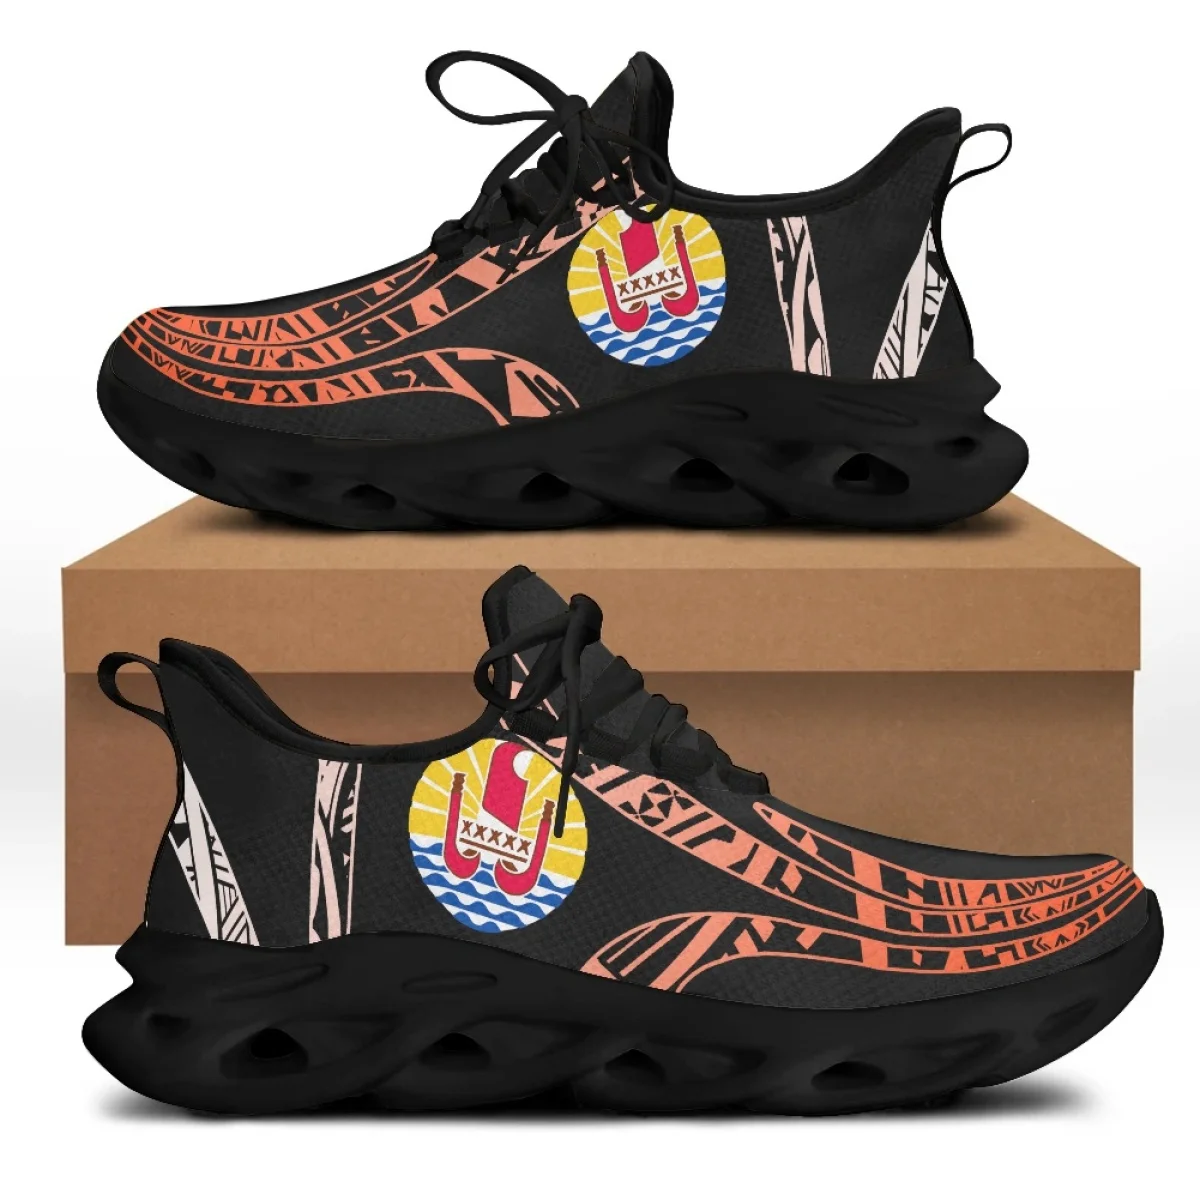 CYWGIFT Полинезийски Традиционни Племенни Принт Мода Тонга Дизайн Дамски Обувки Нови Ежедневни Обувки На Равна подметка Лятна Окото Обувки Zapatos